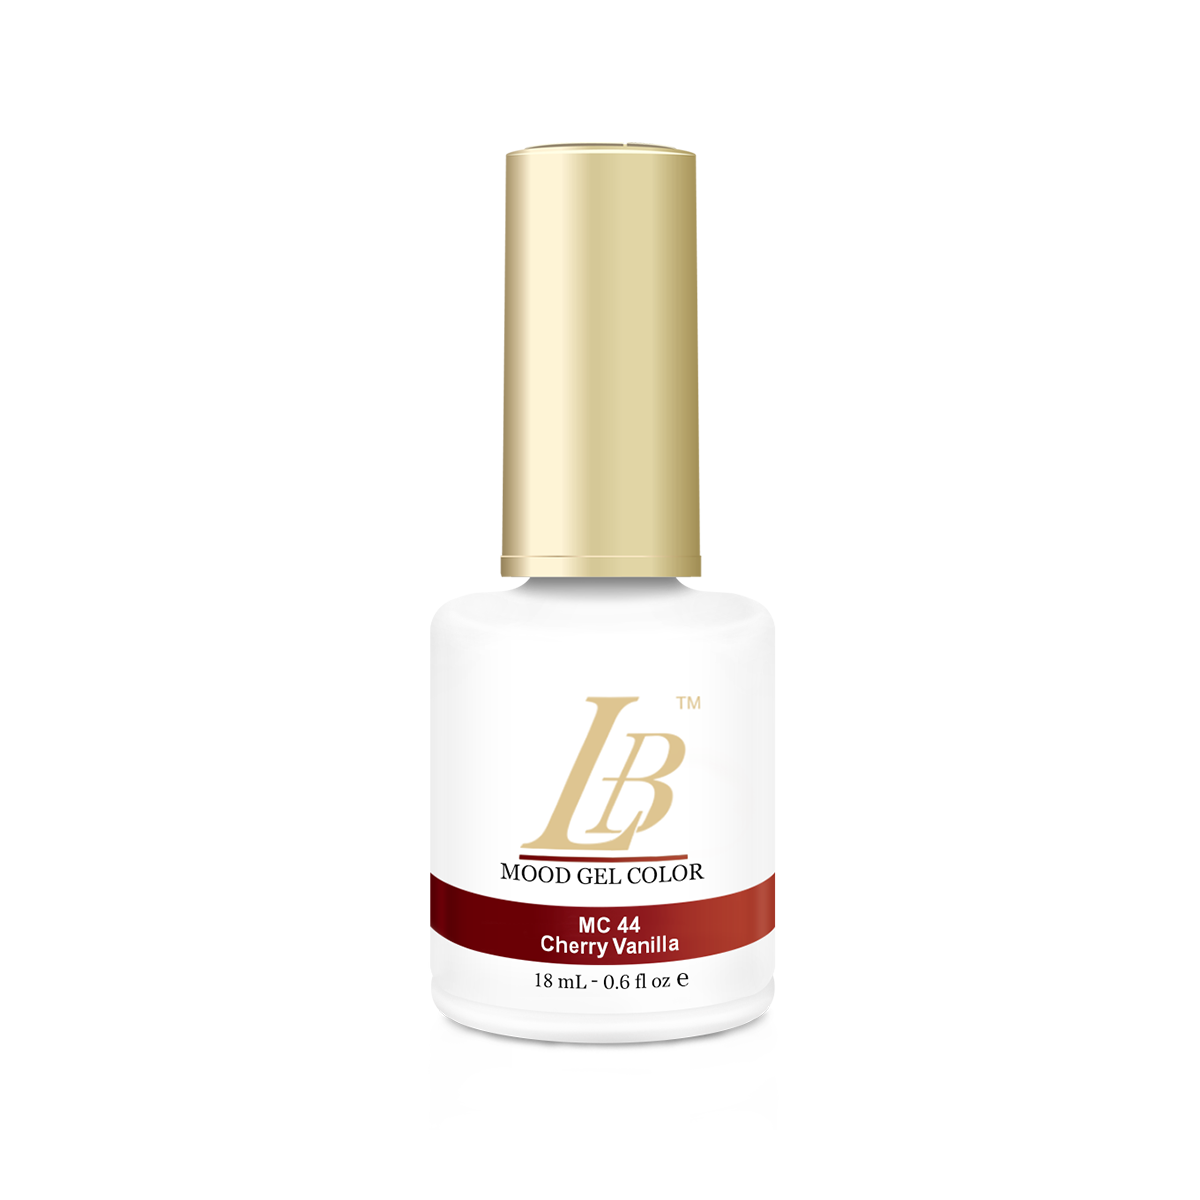 LB Mood Gel Color - MC44 Cherry Vanilla